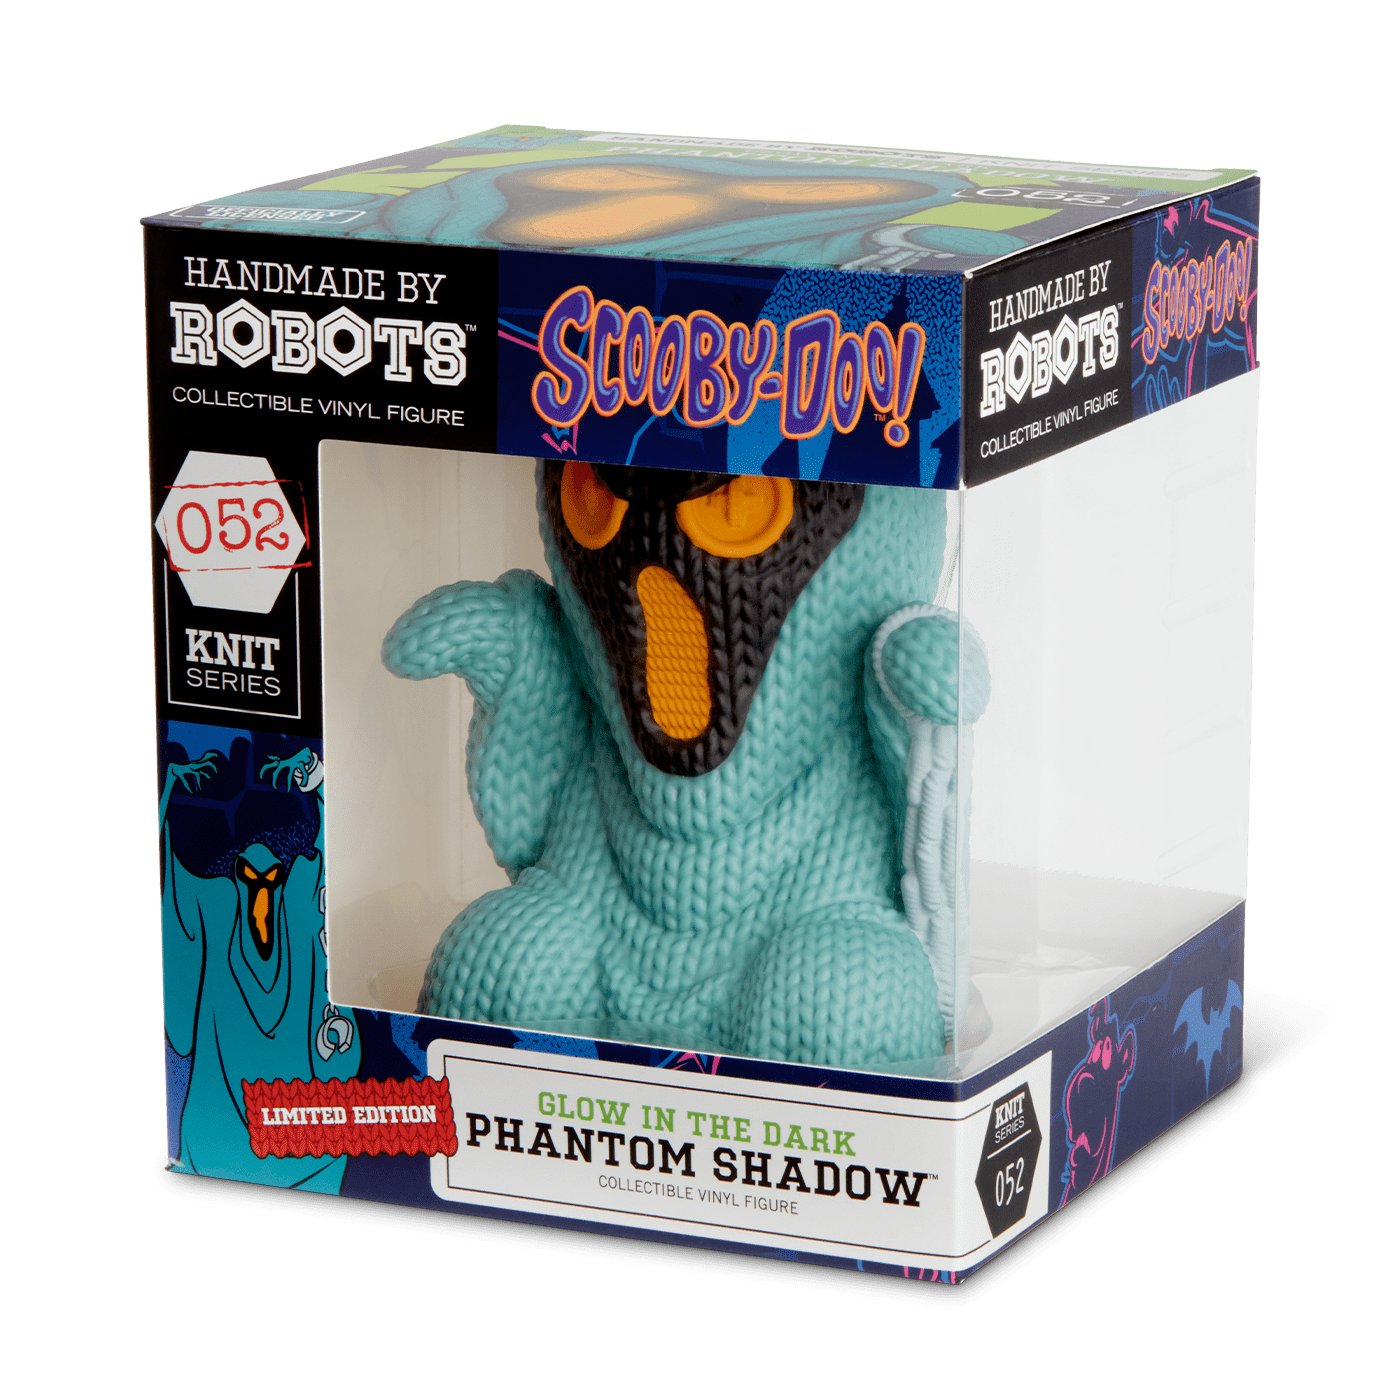 Phantom Shadow #052 - Scooby-Doo - Handmade by Robots - Limited Edition